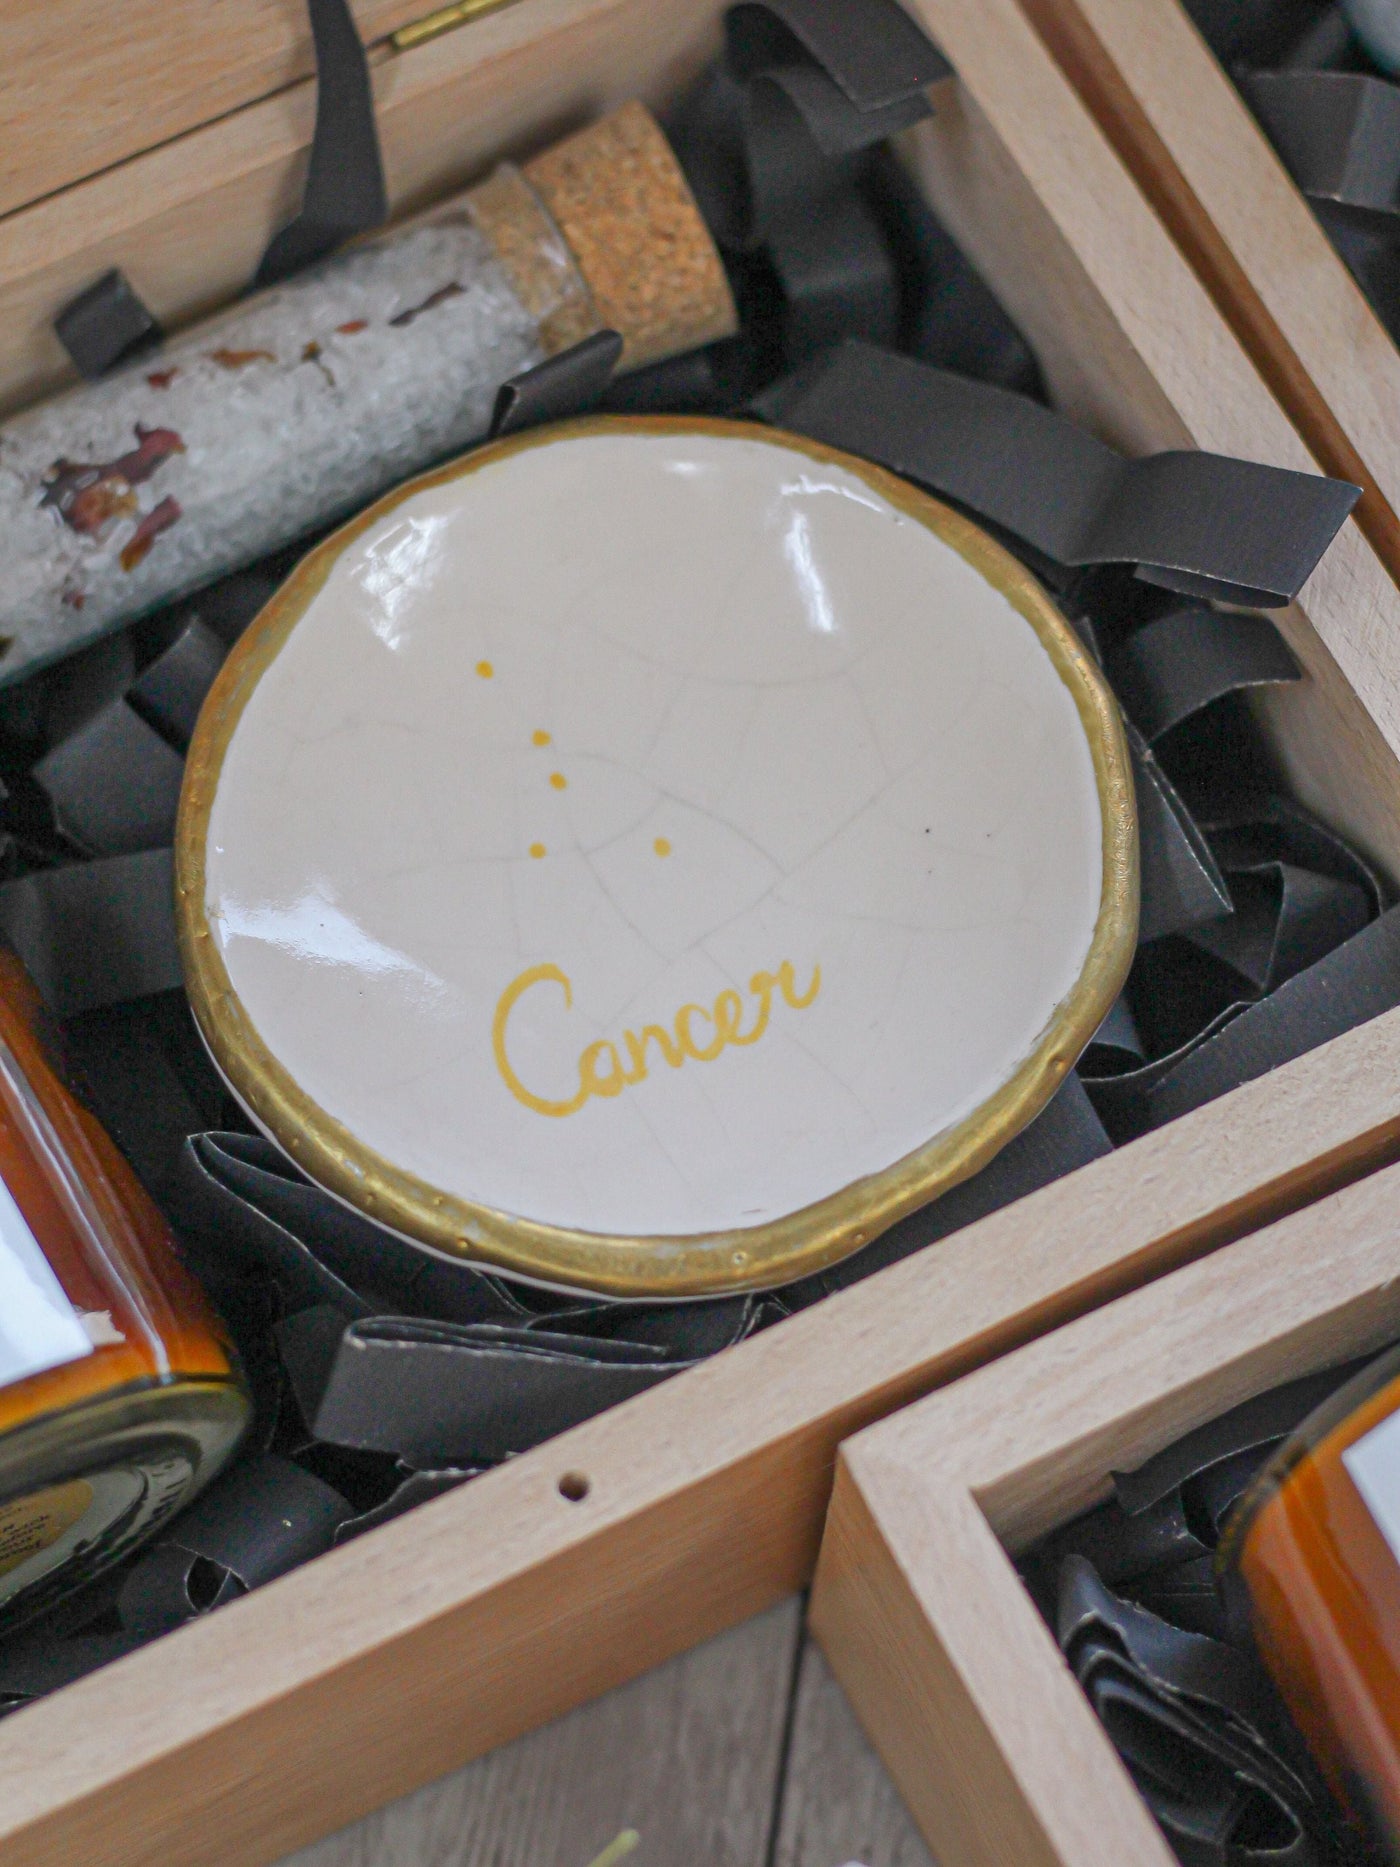 Cancer Zodiac Gift Box